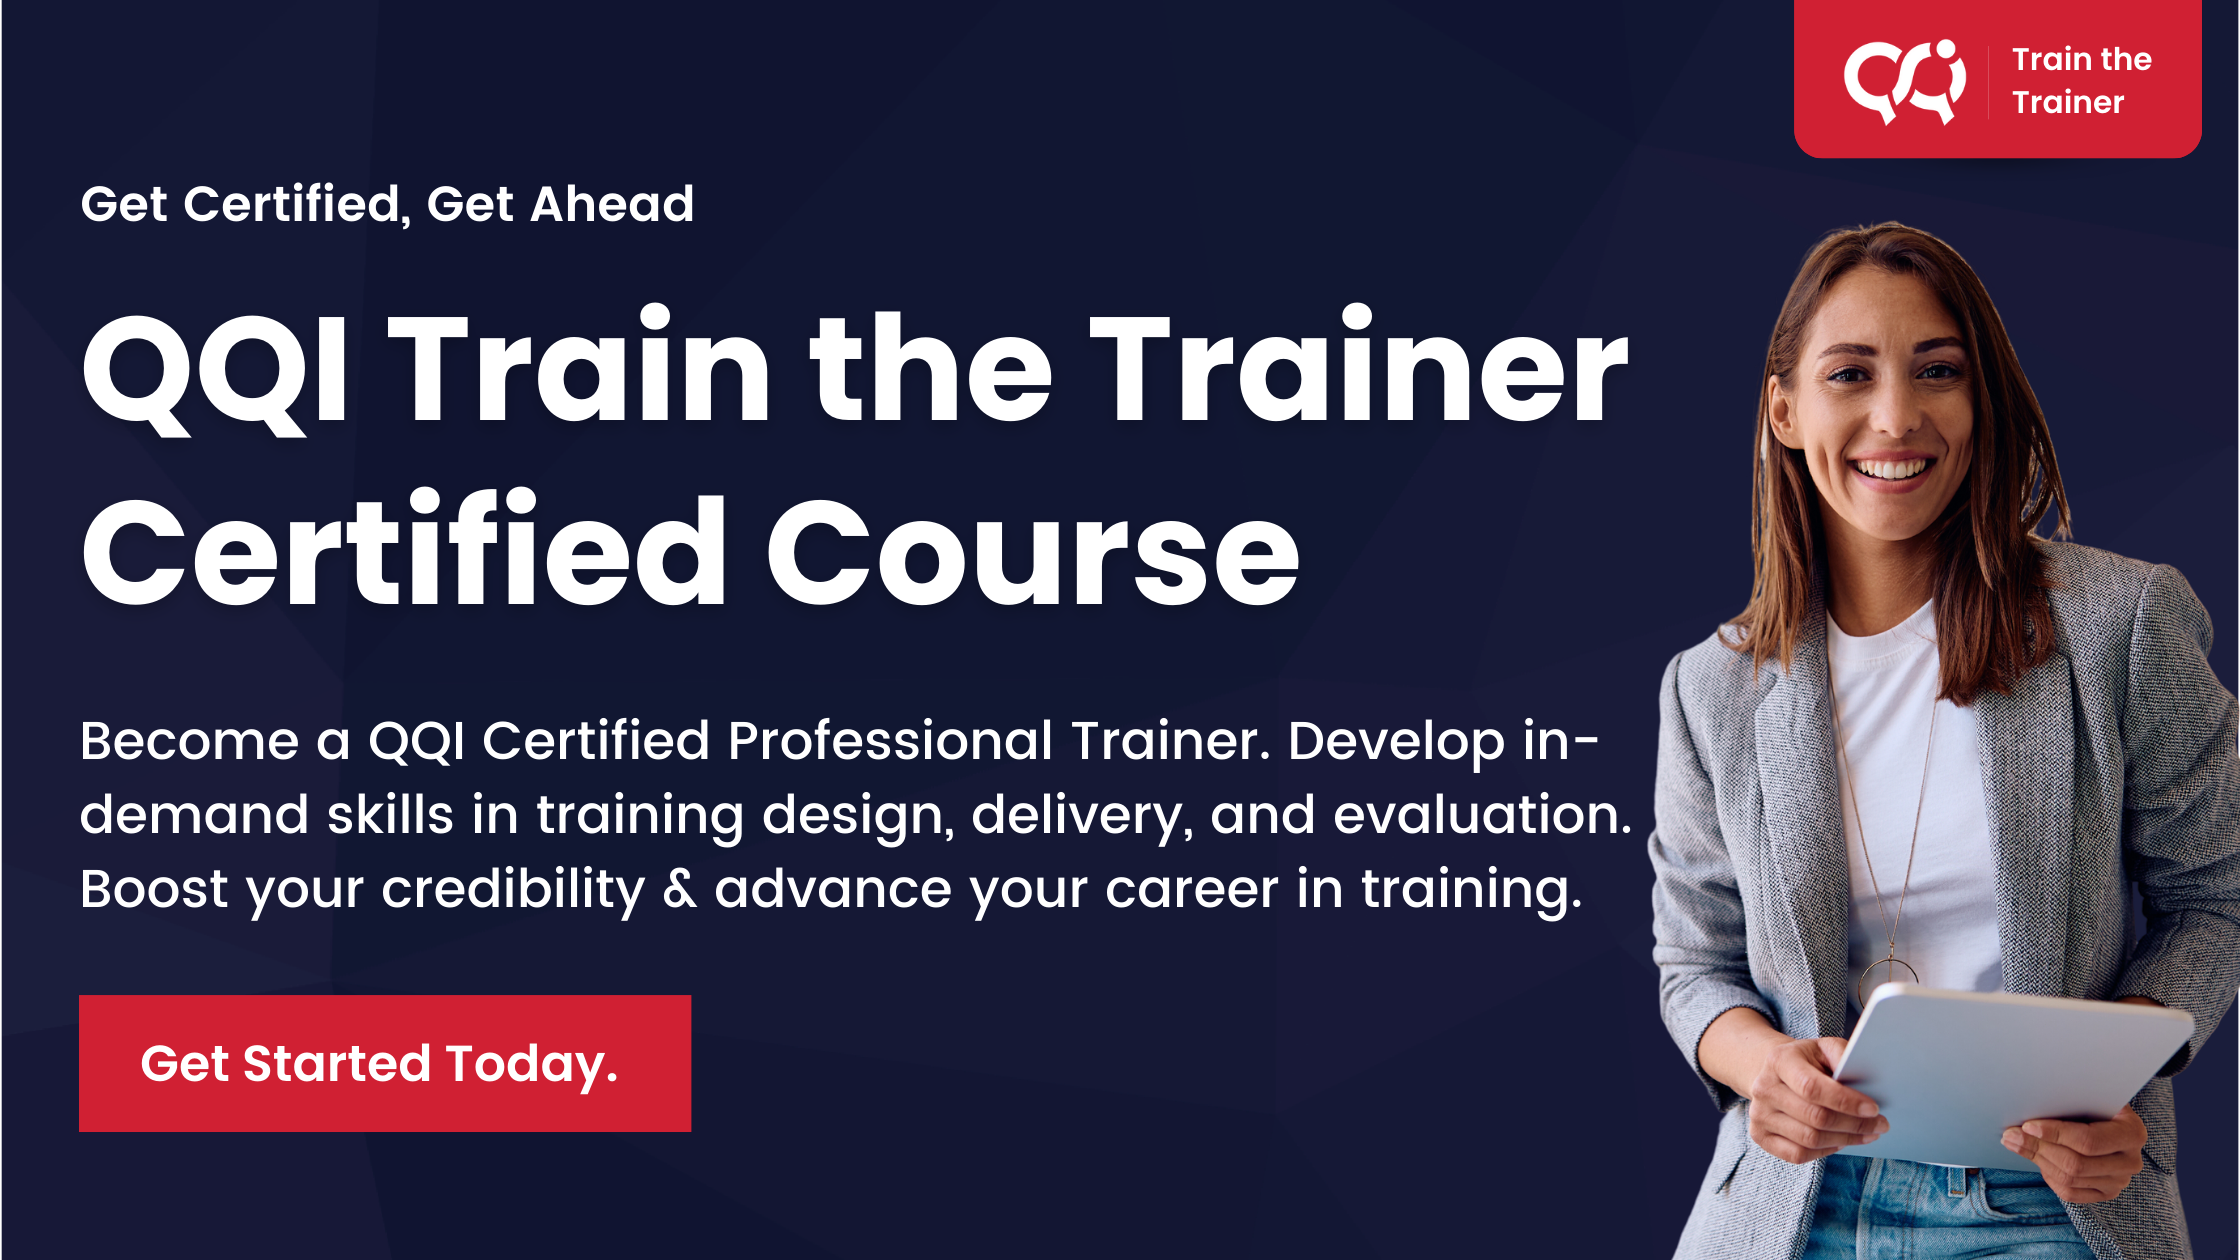 Train the Trainer Open Course